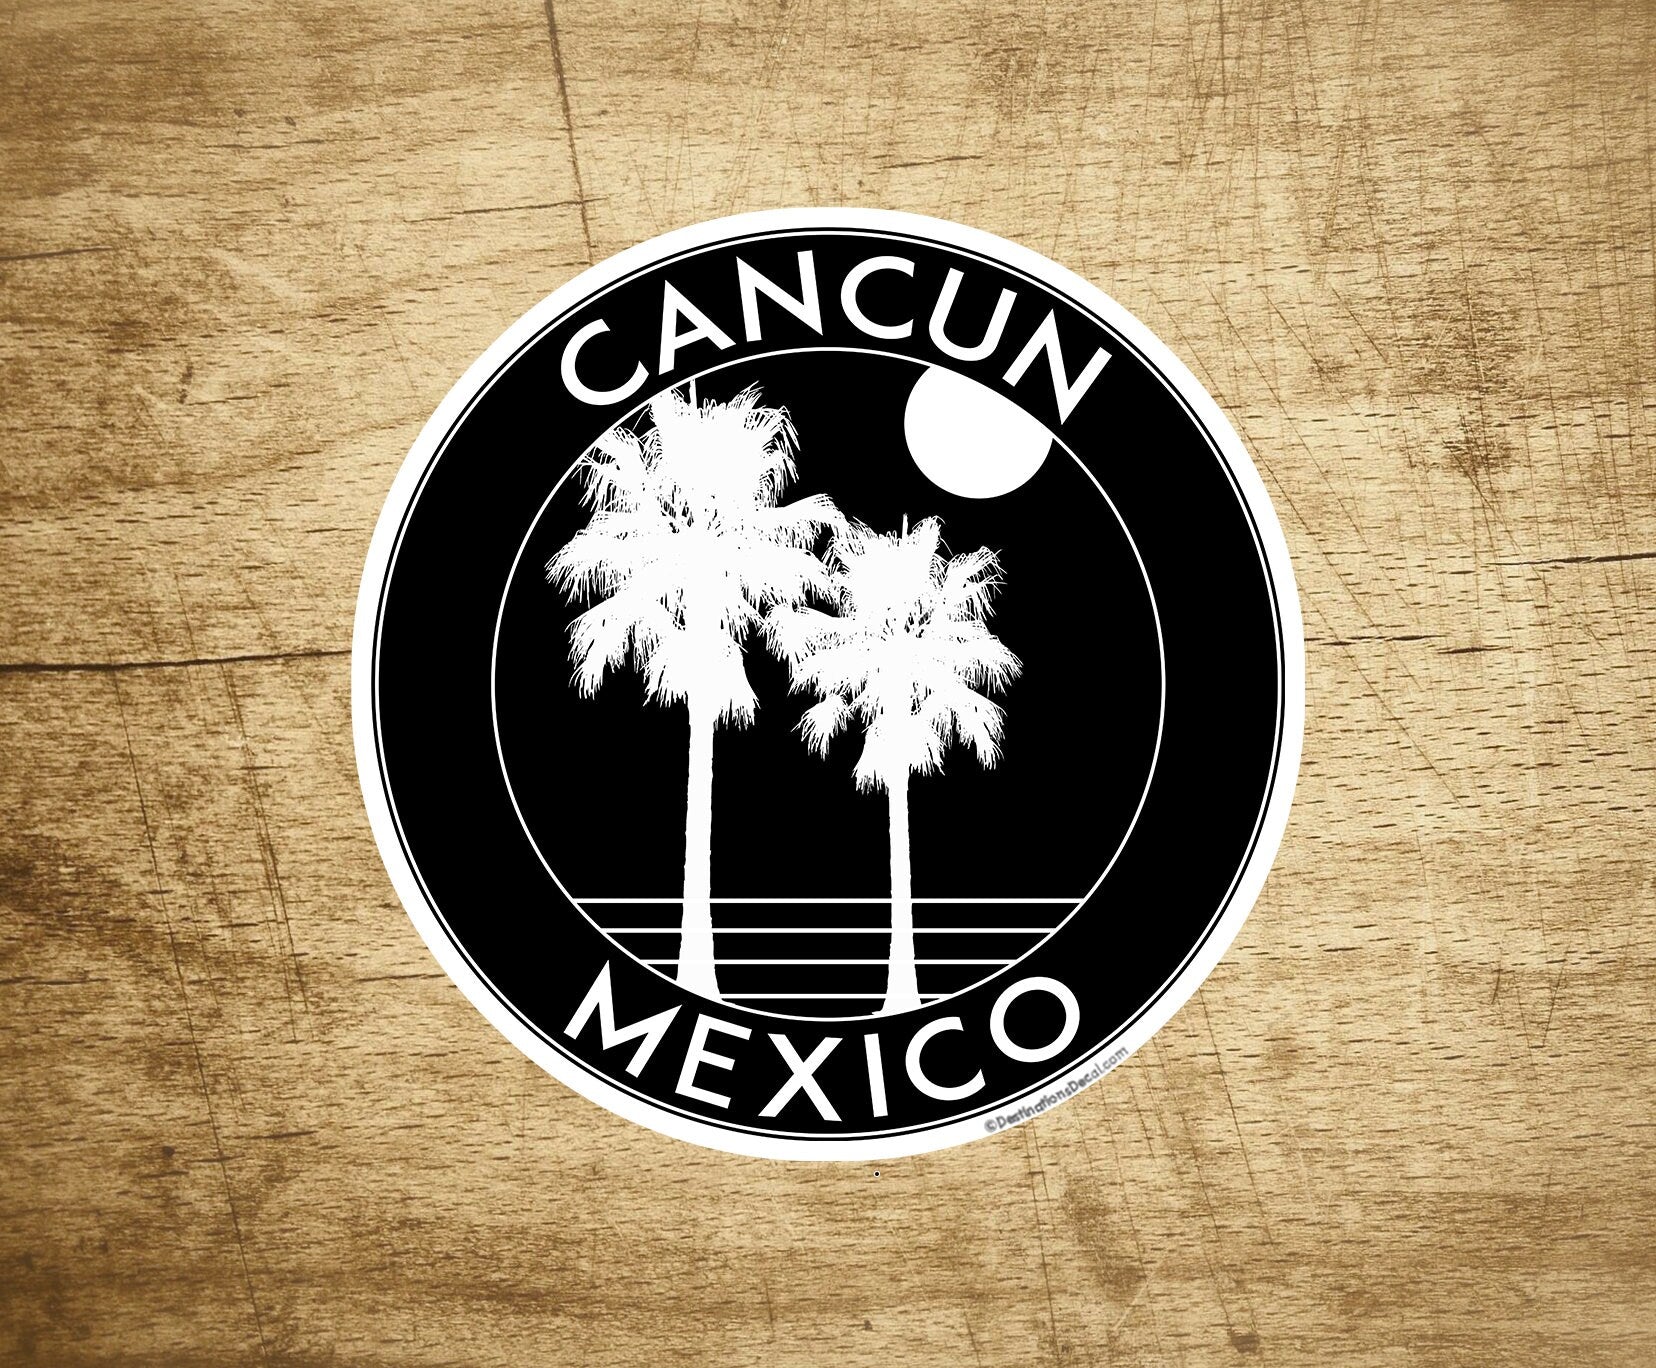 Cancun Mexico Sticker Decal 3"